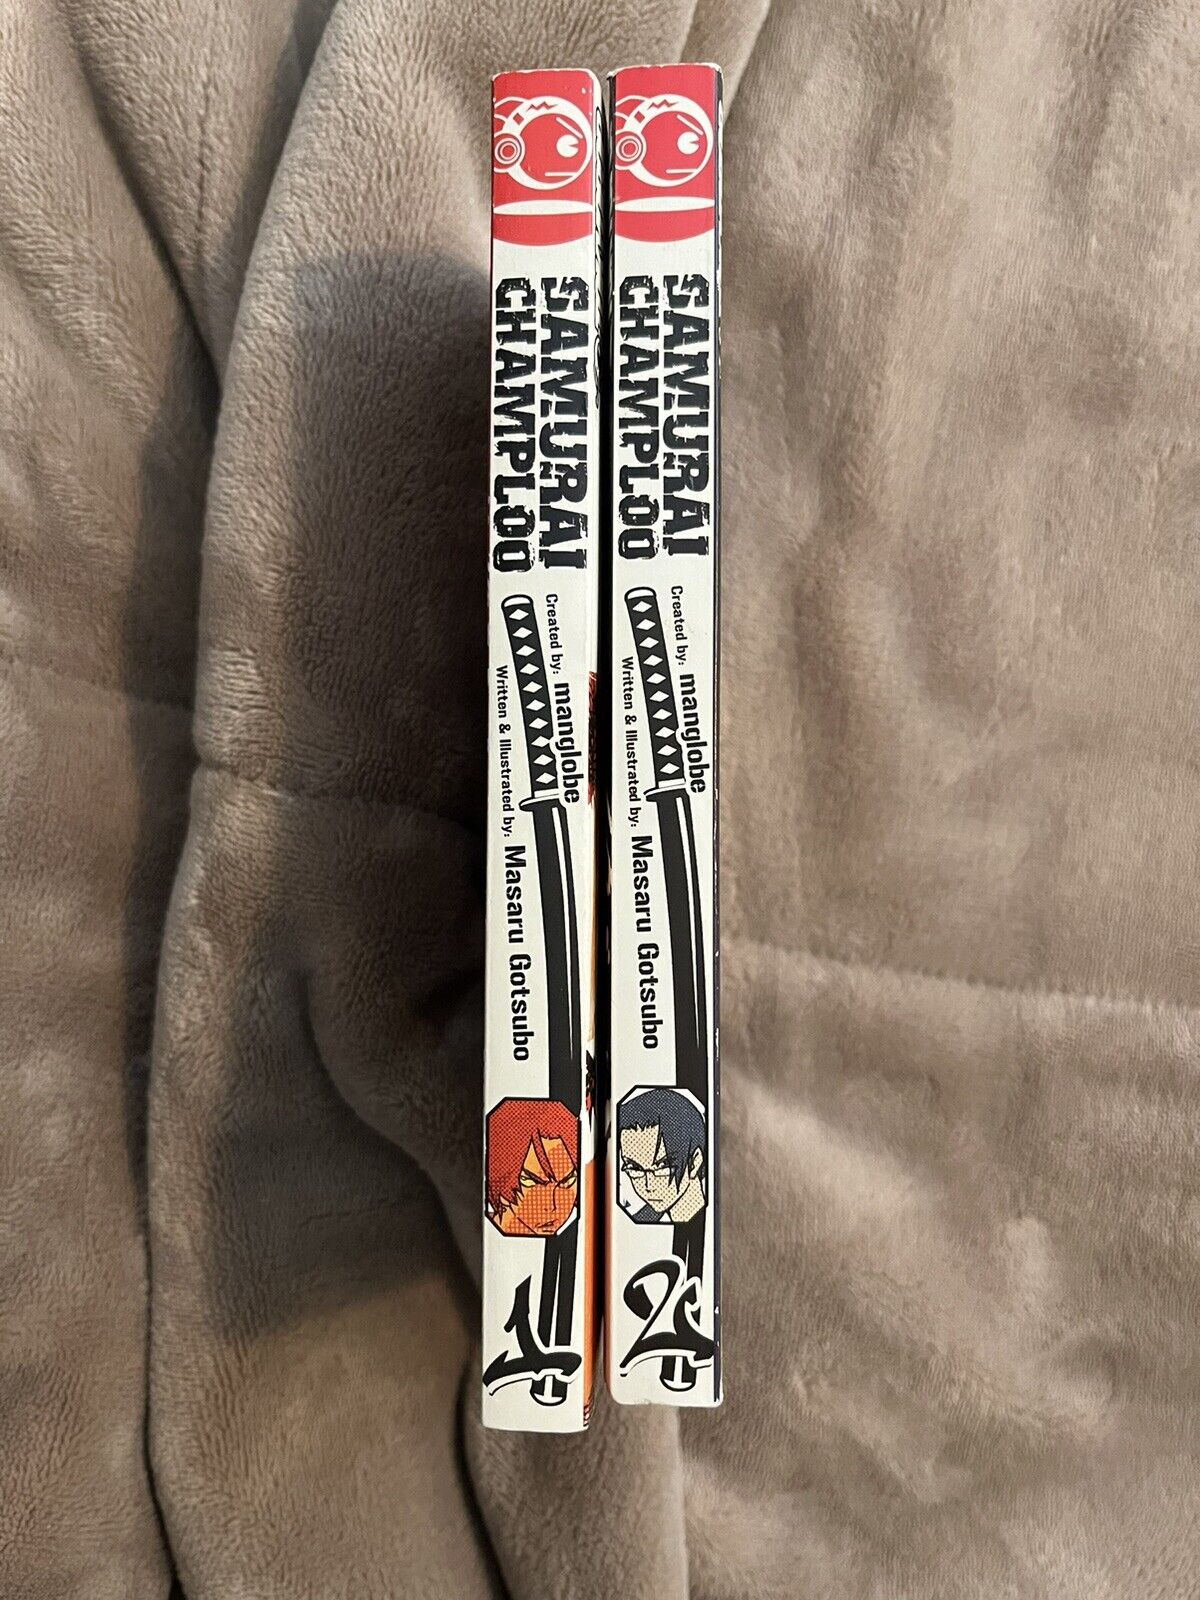 Samurai Champloo Manga Volume 1 & 2 Complete English Tokyopop